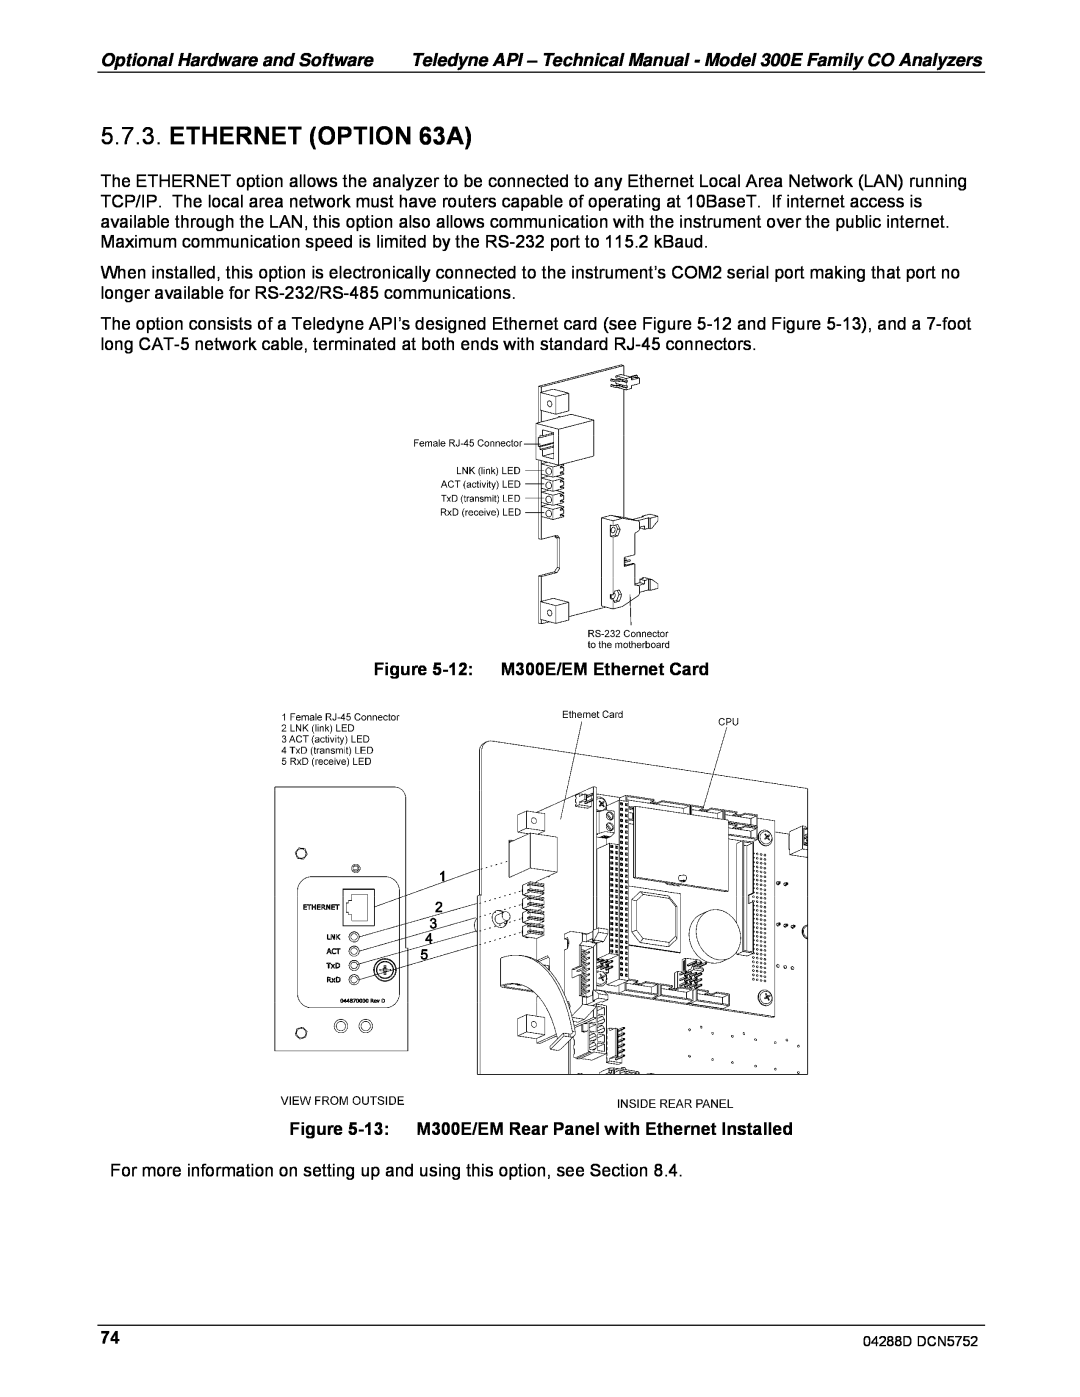 Teledyne M300EM operation manual ETHERNET OPTION 63A, 12:M300E/EM Ethernet Card 